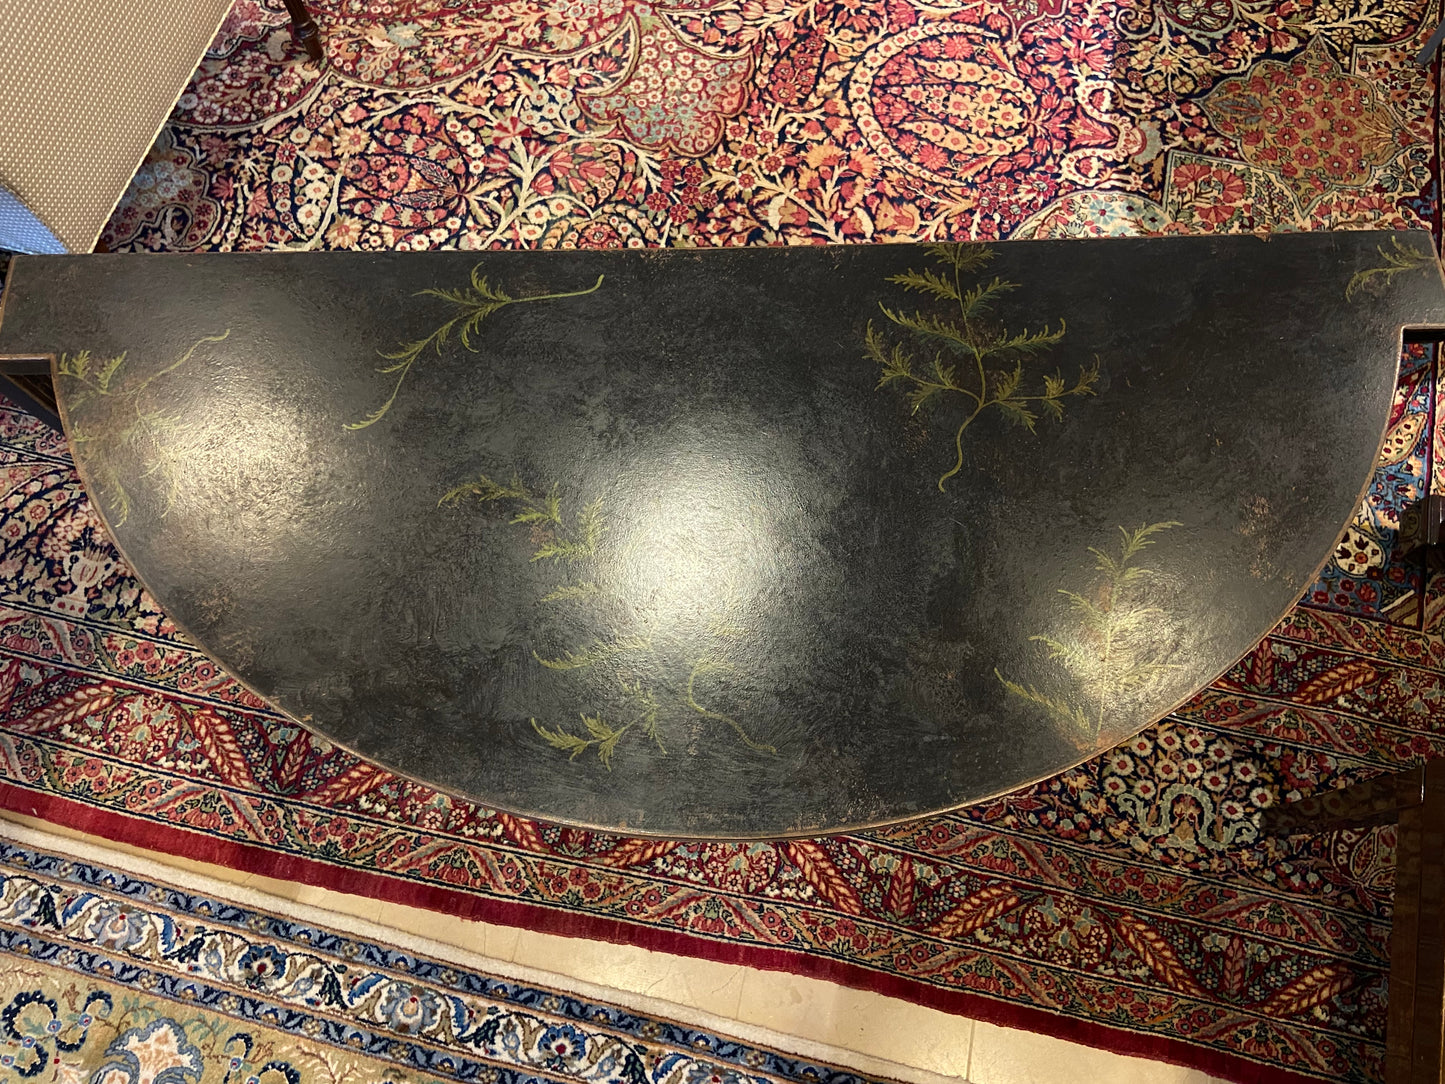 Black Patina Demilune Table (26550)